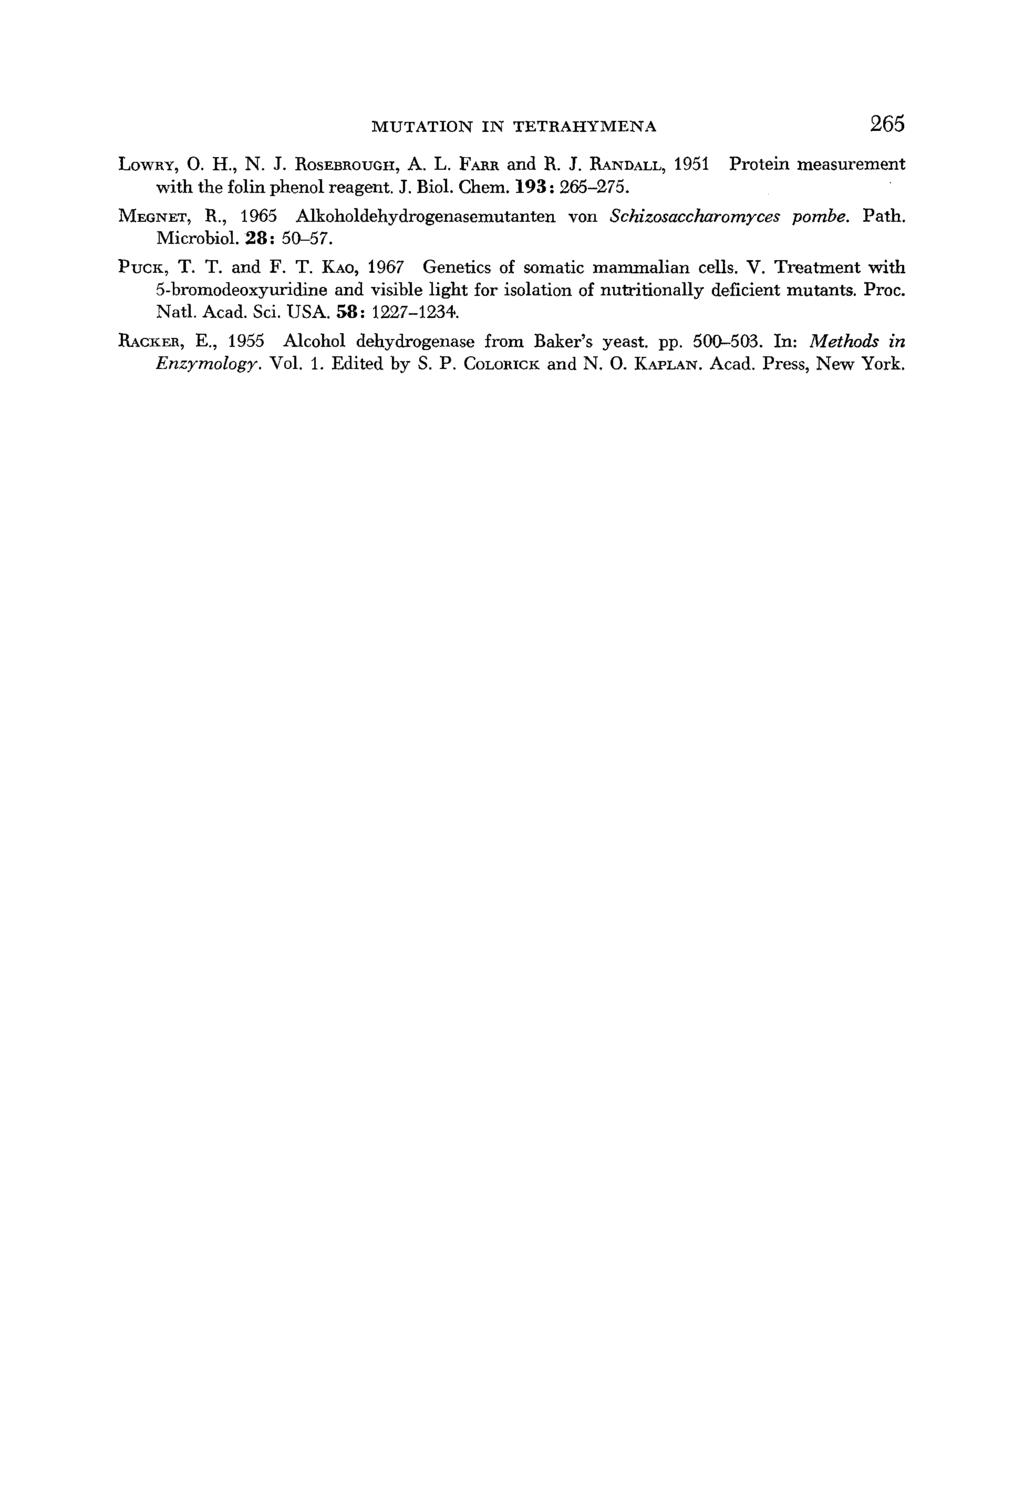 MUTATION IN TETRAHYMENA 265 LOWRY, 0. H., N. J. ROSEBROUGH, A. L. FARR and R. J. RANDALL, 1951 Protein measurement with the folin phenol reagent. J. Biol. Chem. 193: 265-275. MEGNET, R.